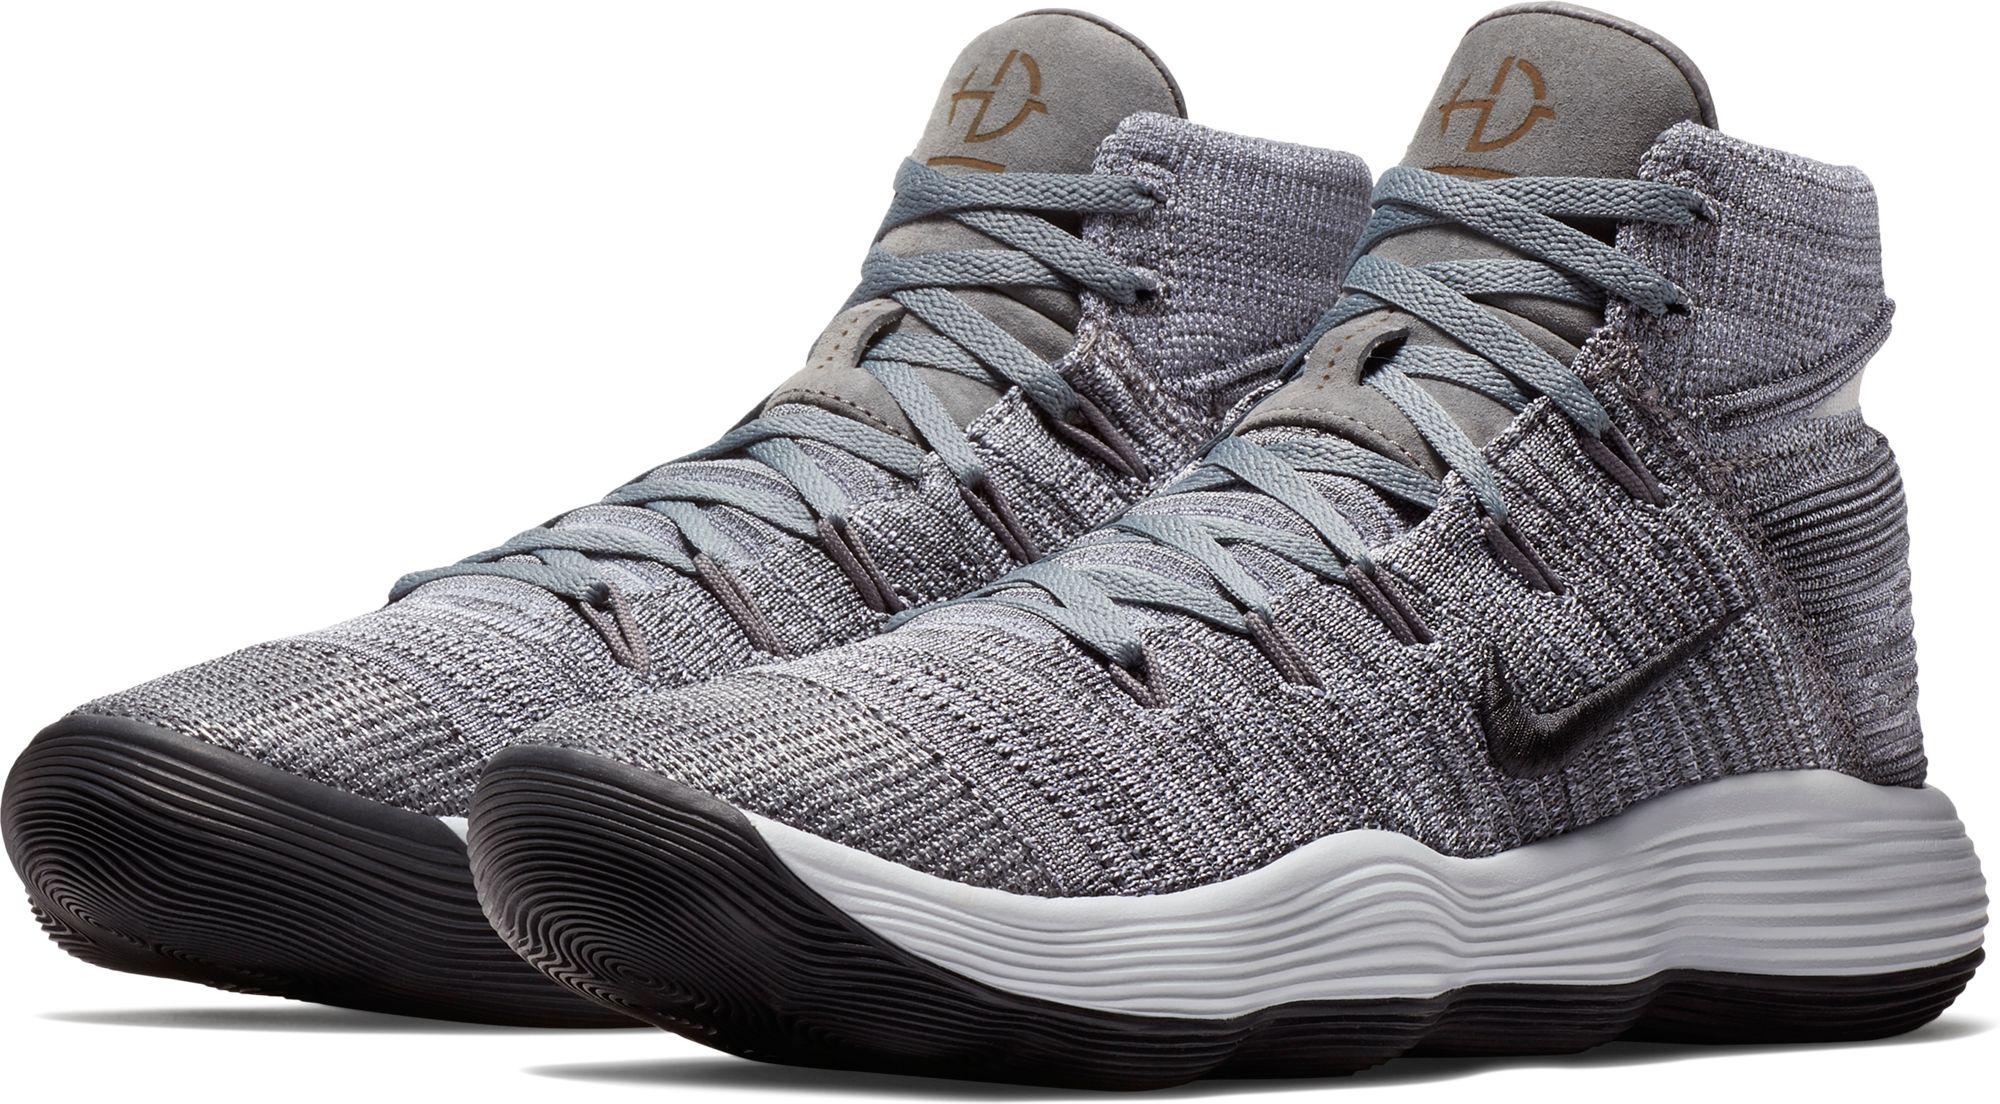 Lyst - Nike React Hyperdunk 2017 Flyknit Basketball Shoes in Gray for Men